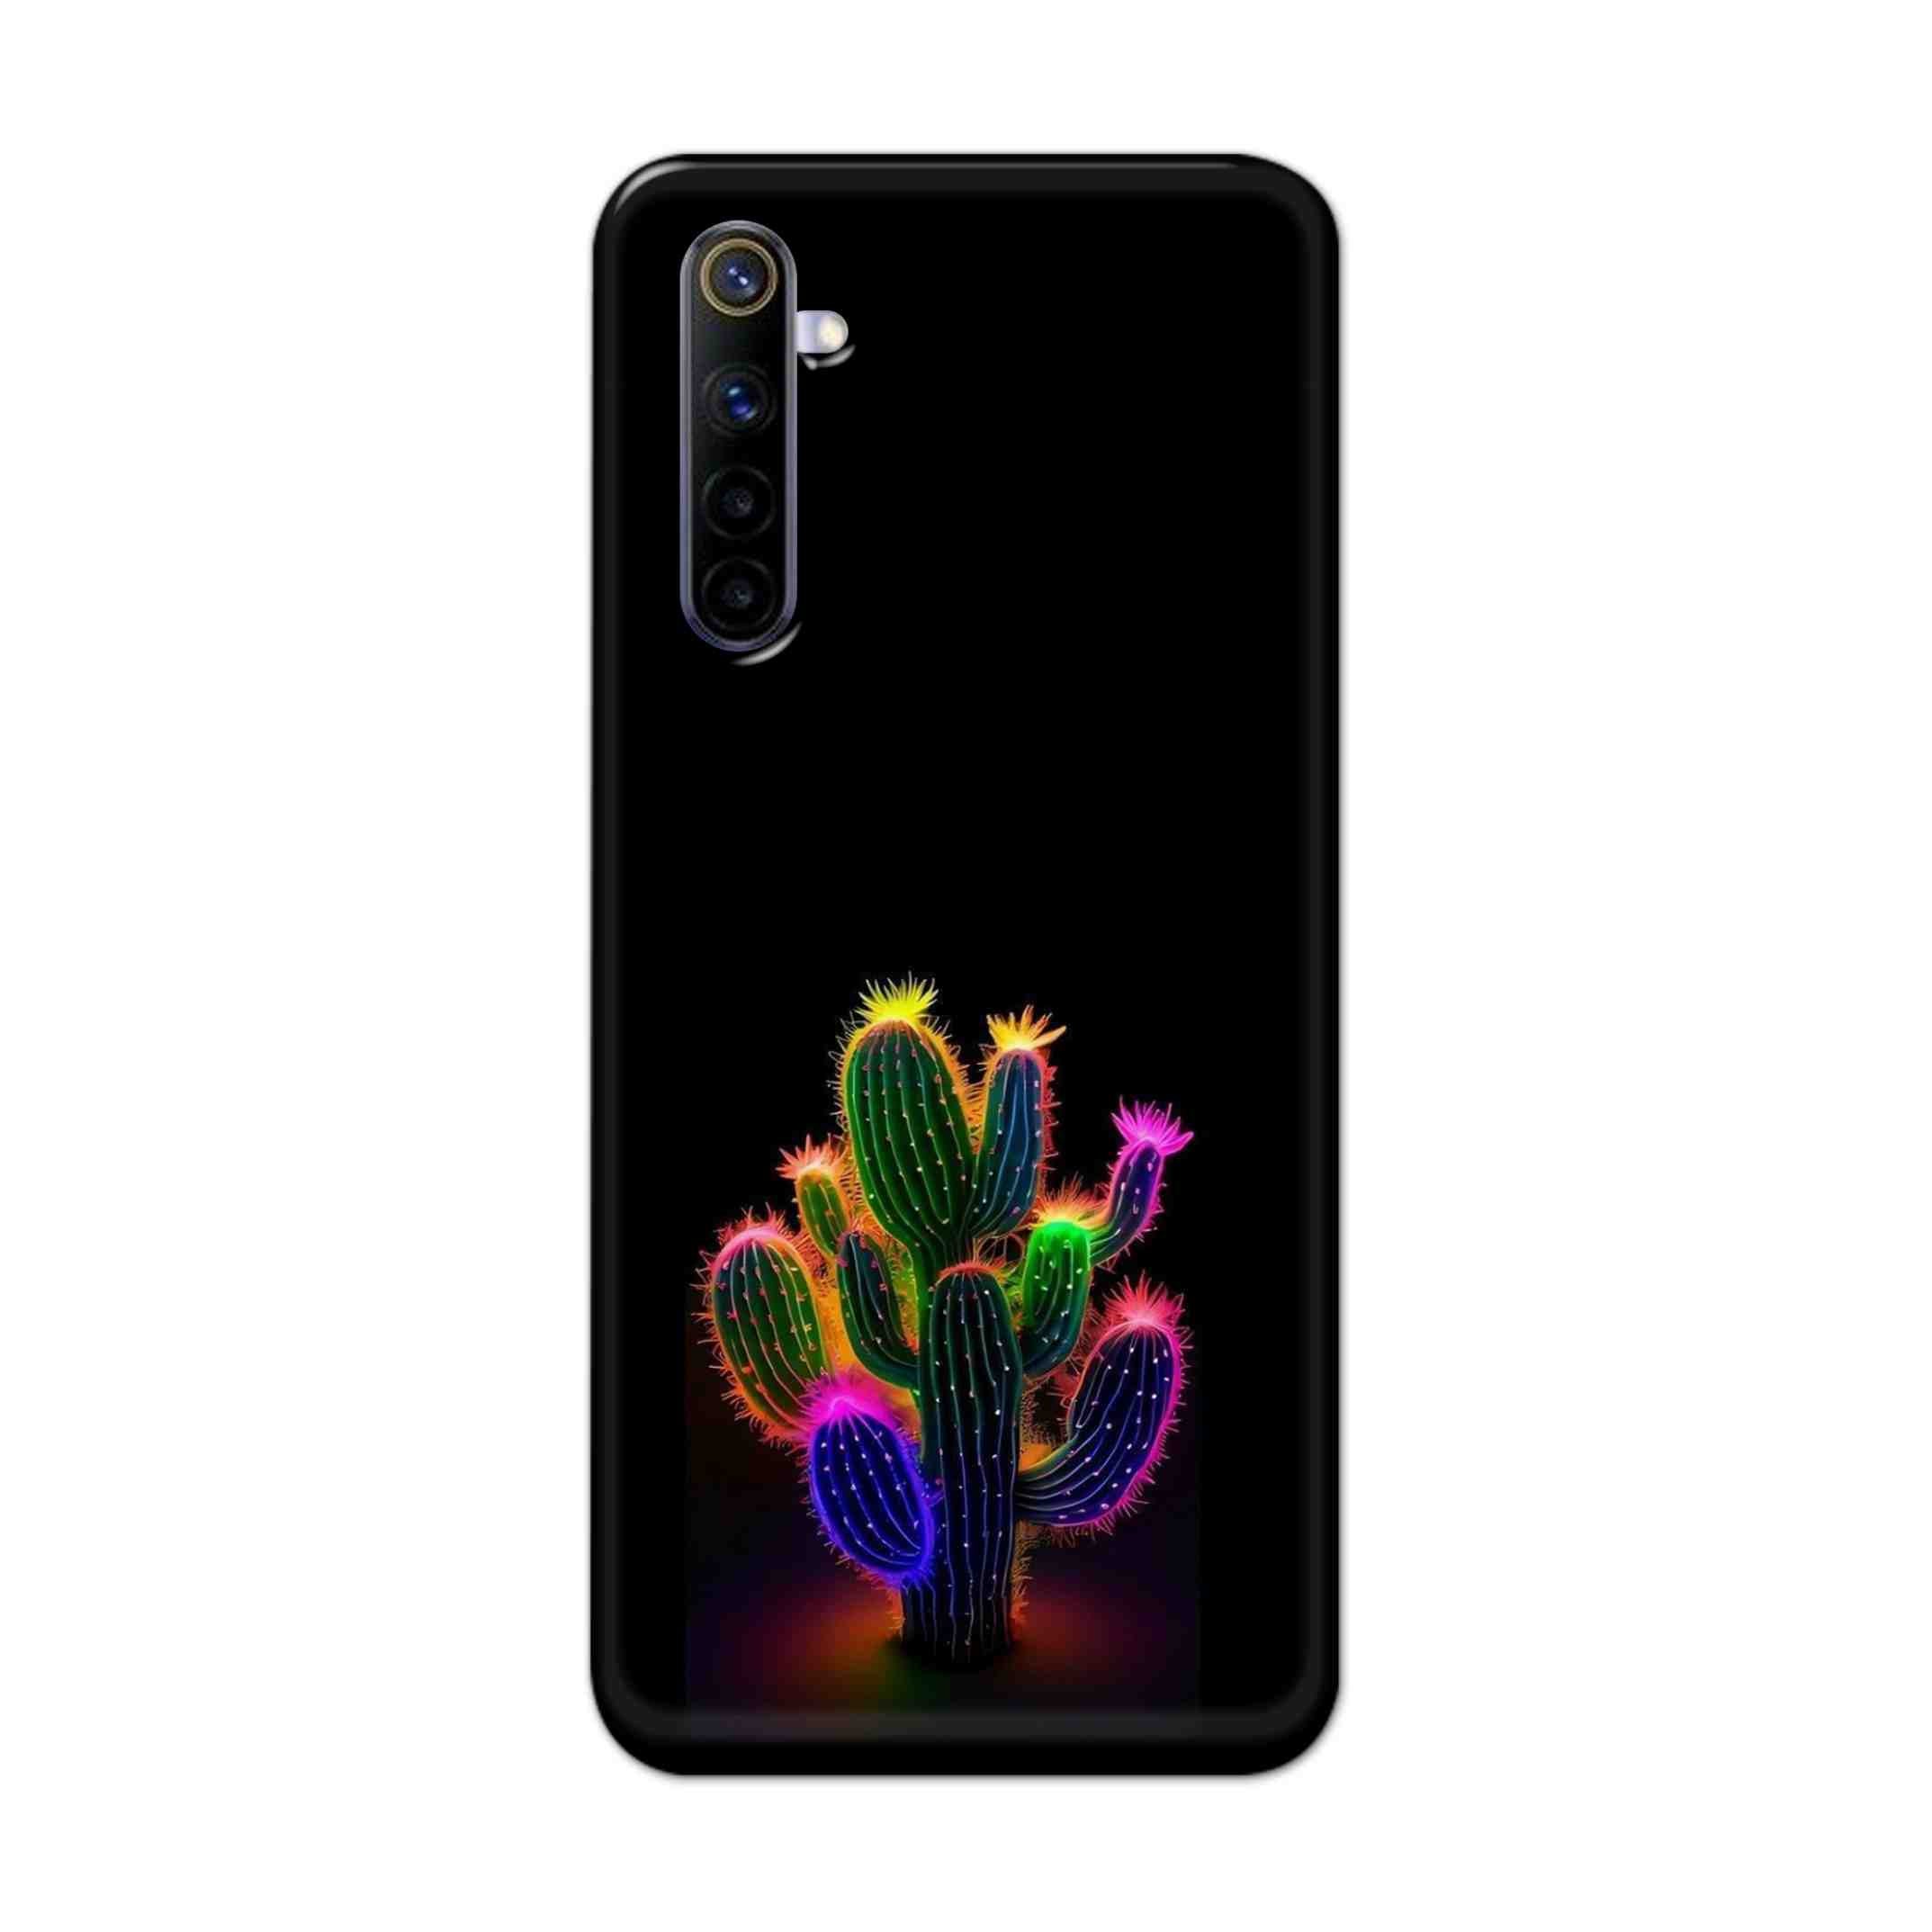 Buy Neon Flower Hard Back Mobile Phone Case Cover For REALME 6 PRO Online